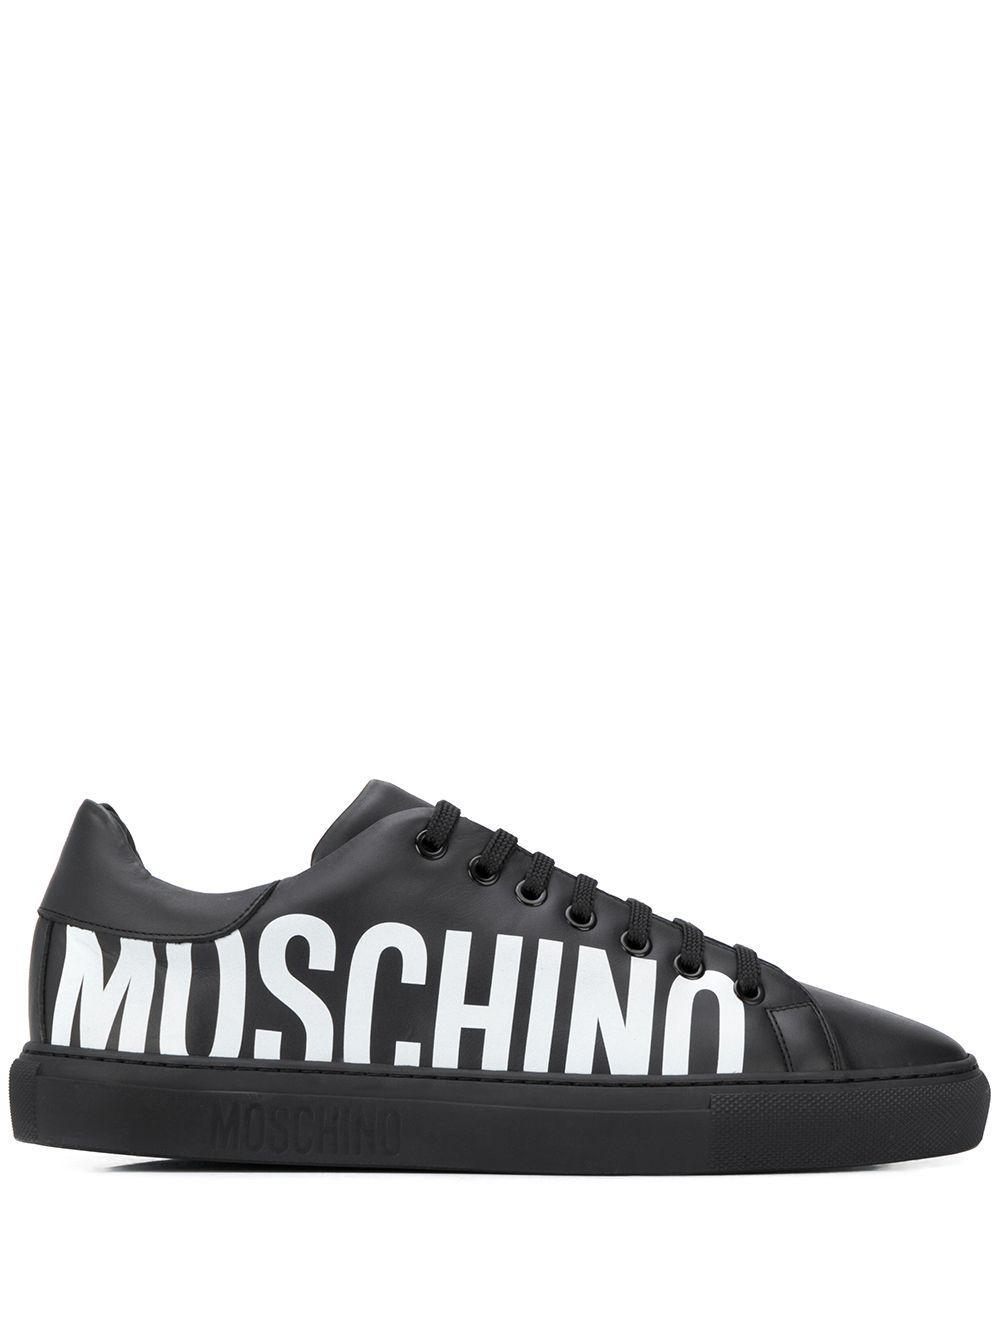 Moschino Leather Logo Sneaker in Black (White) for Men - Lyst